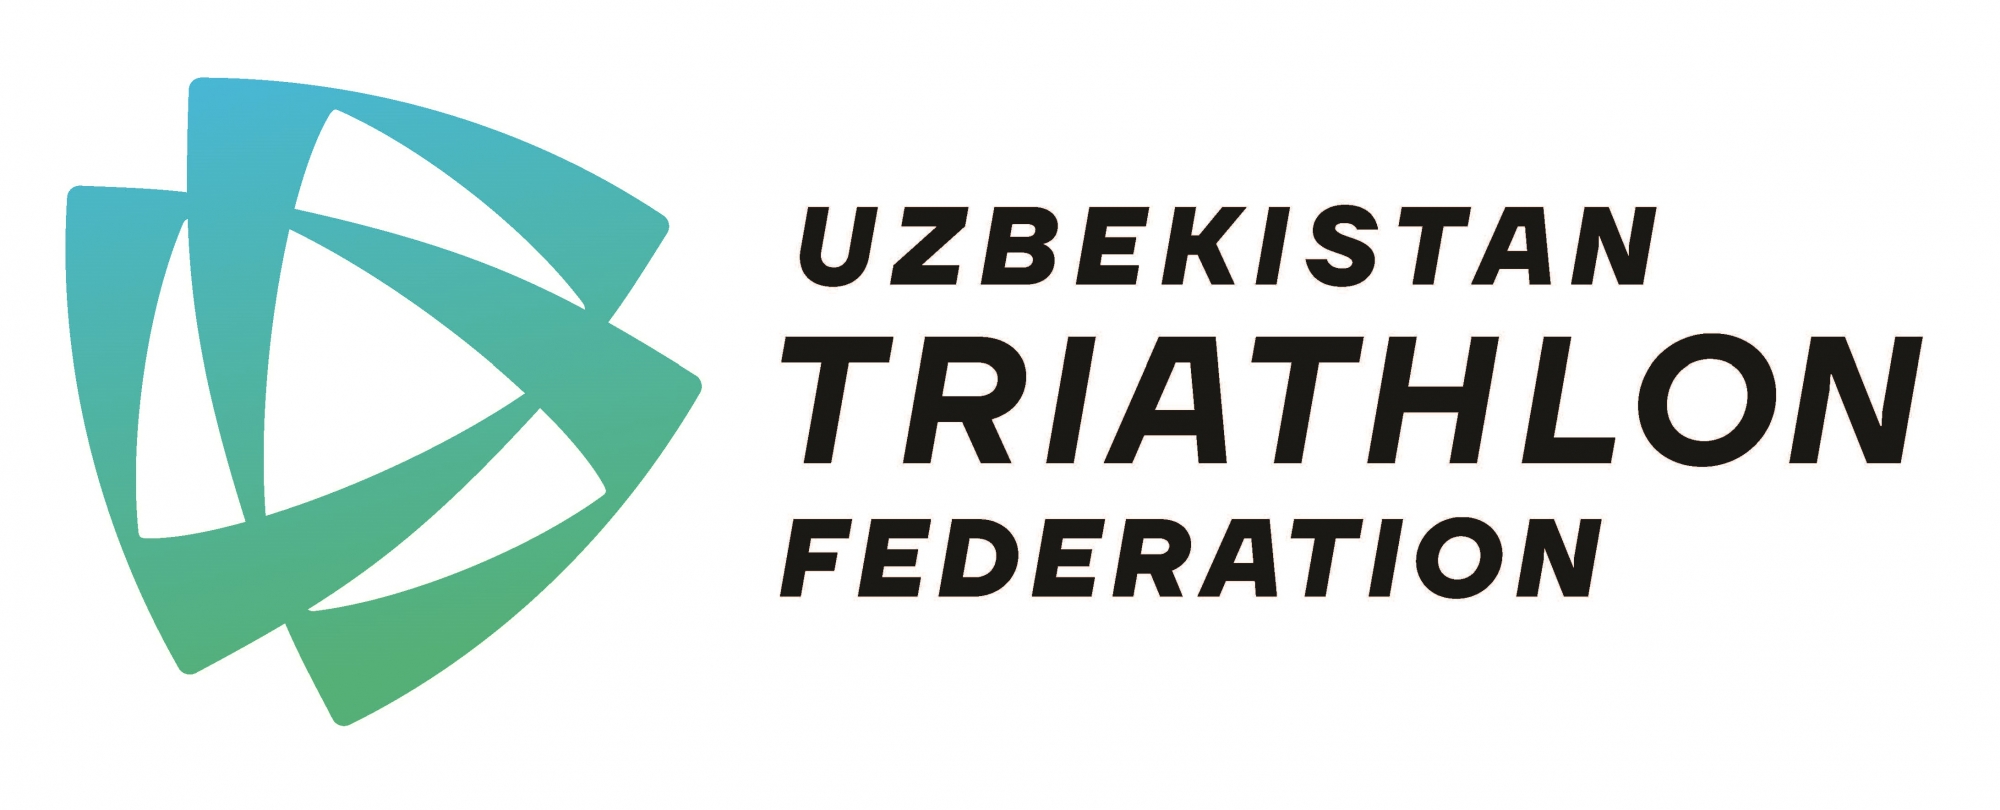 Uzbekistan Triathlon Federation